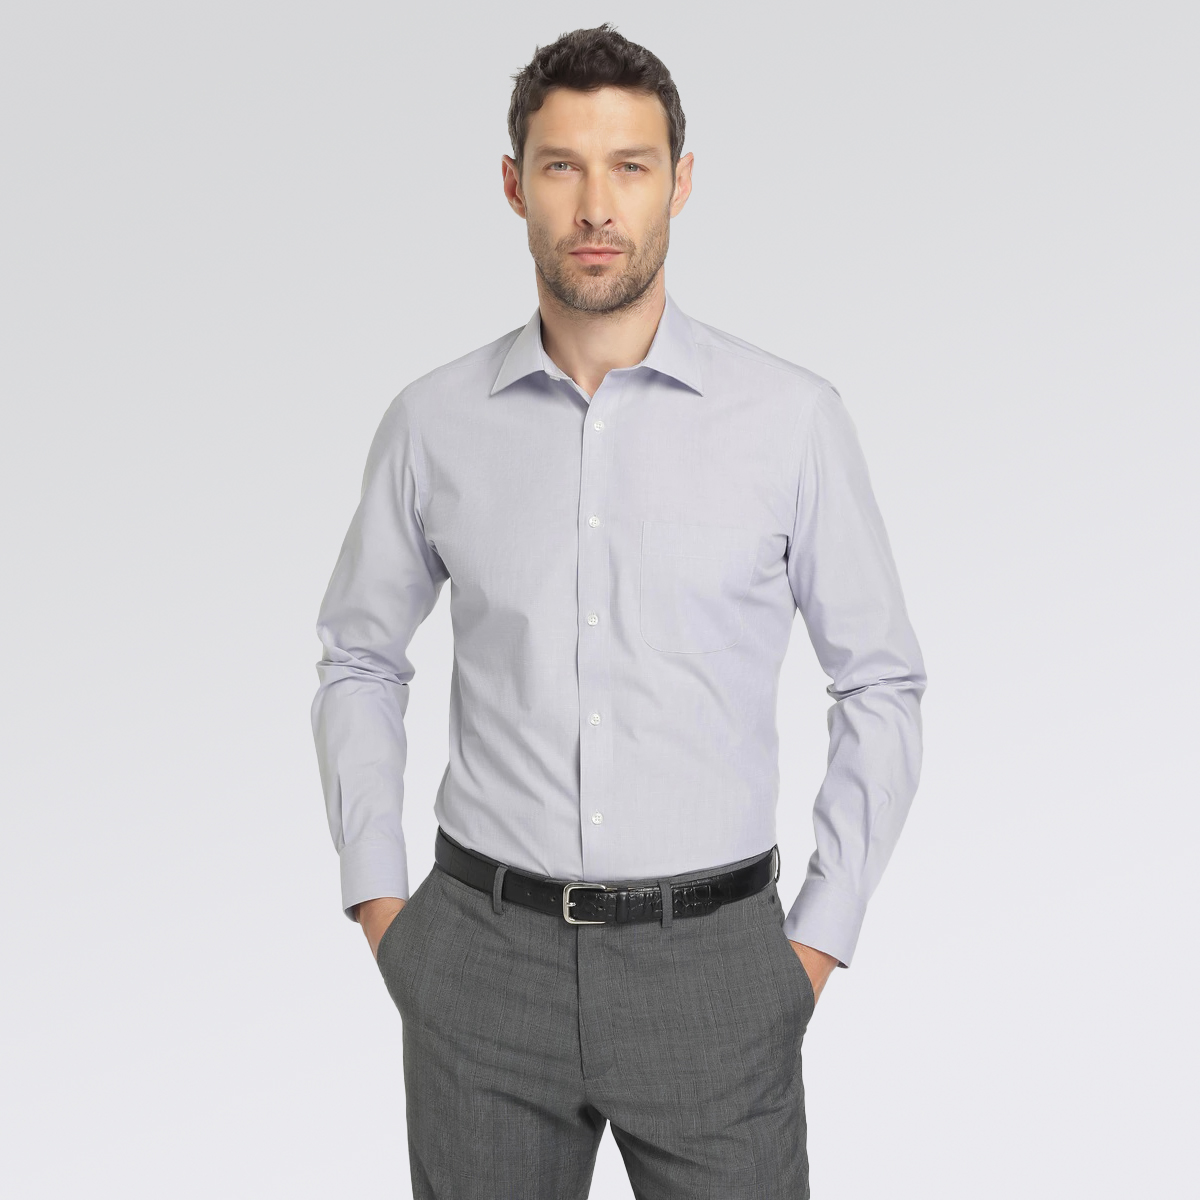 Camisa elegante, ideal para uniforme ejecutivo